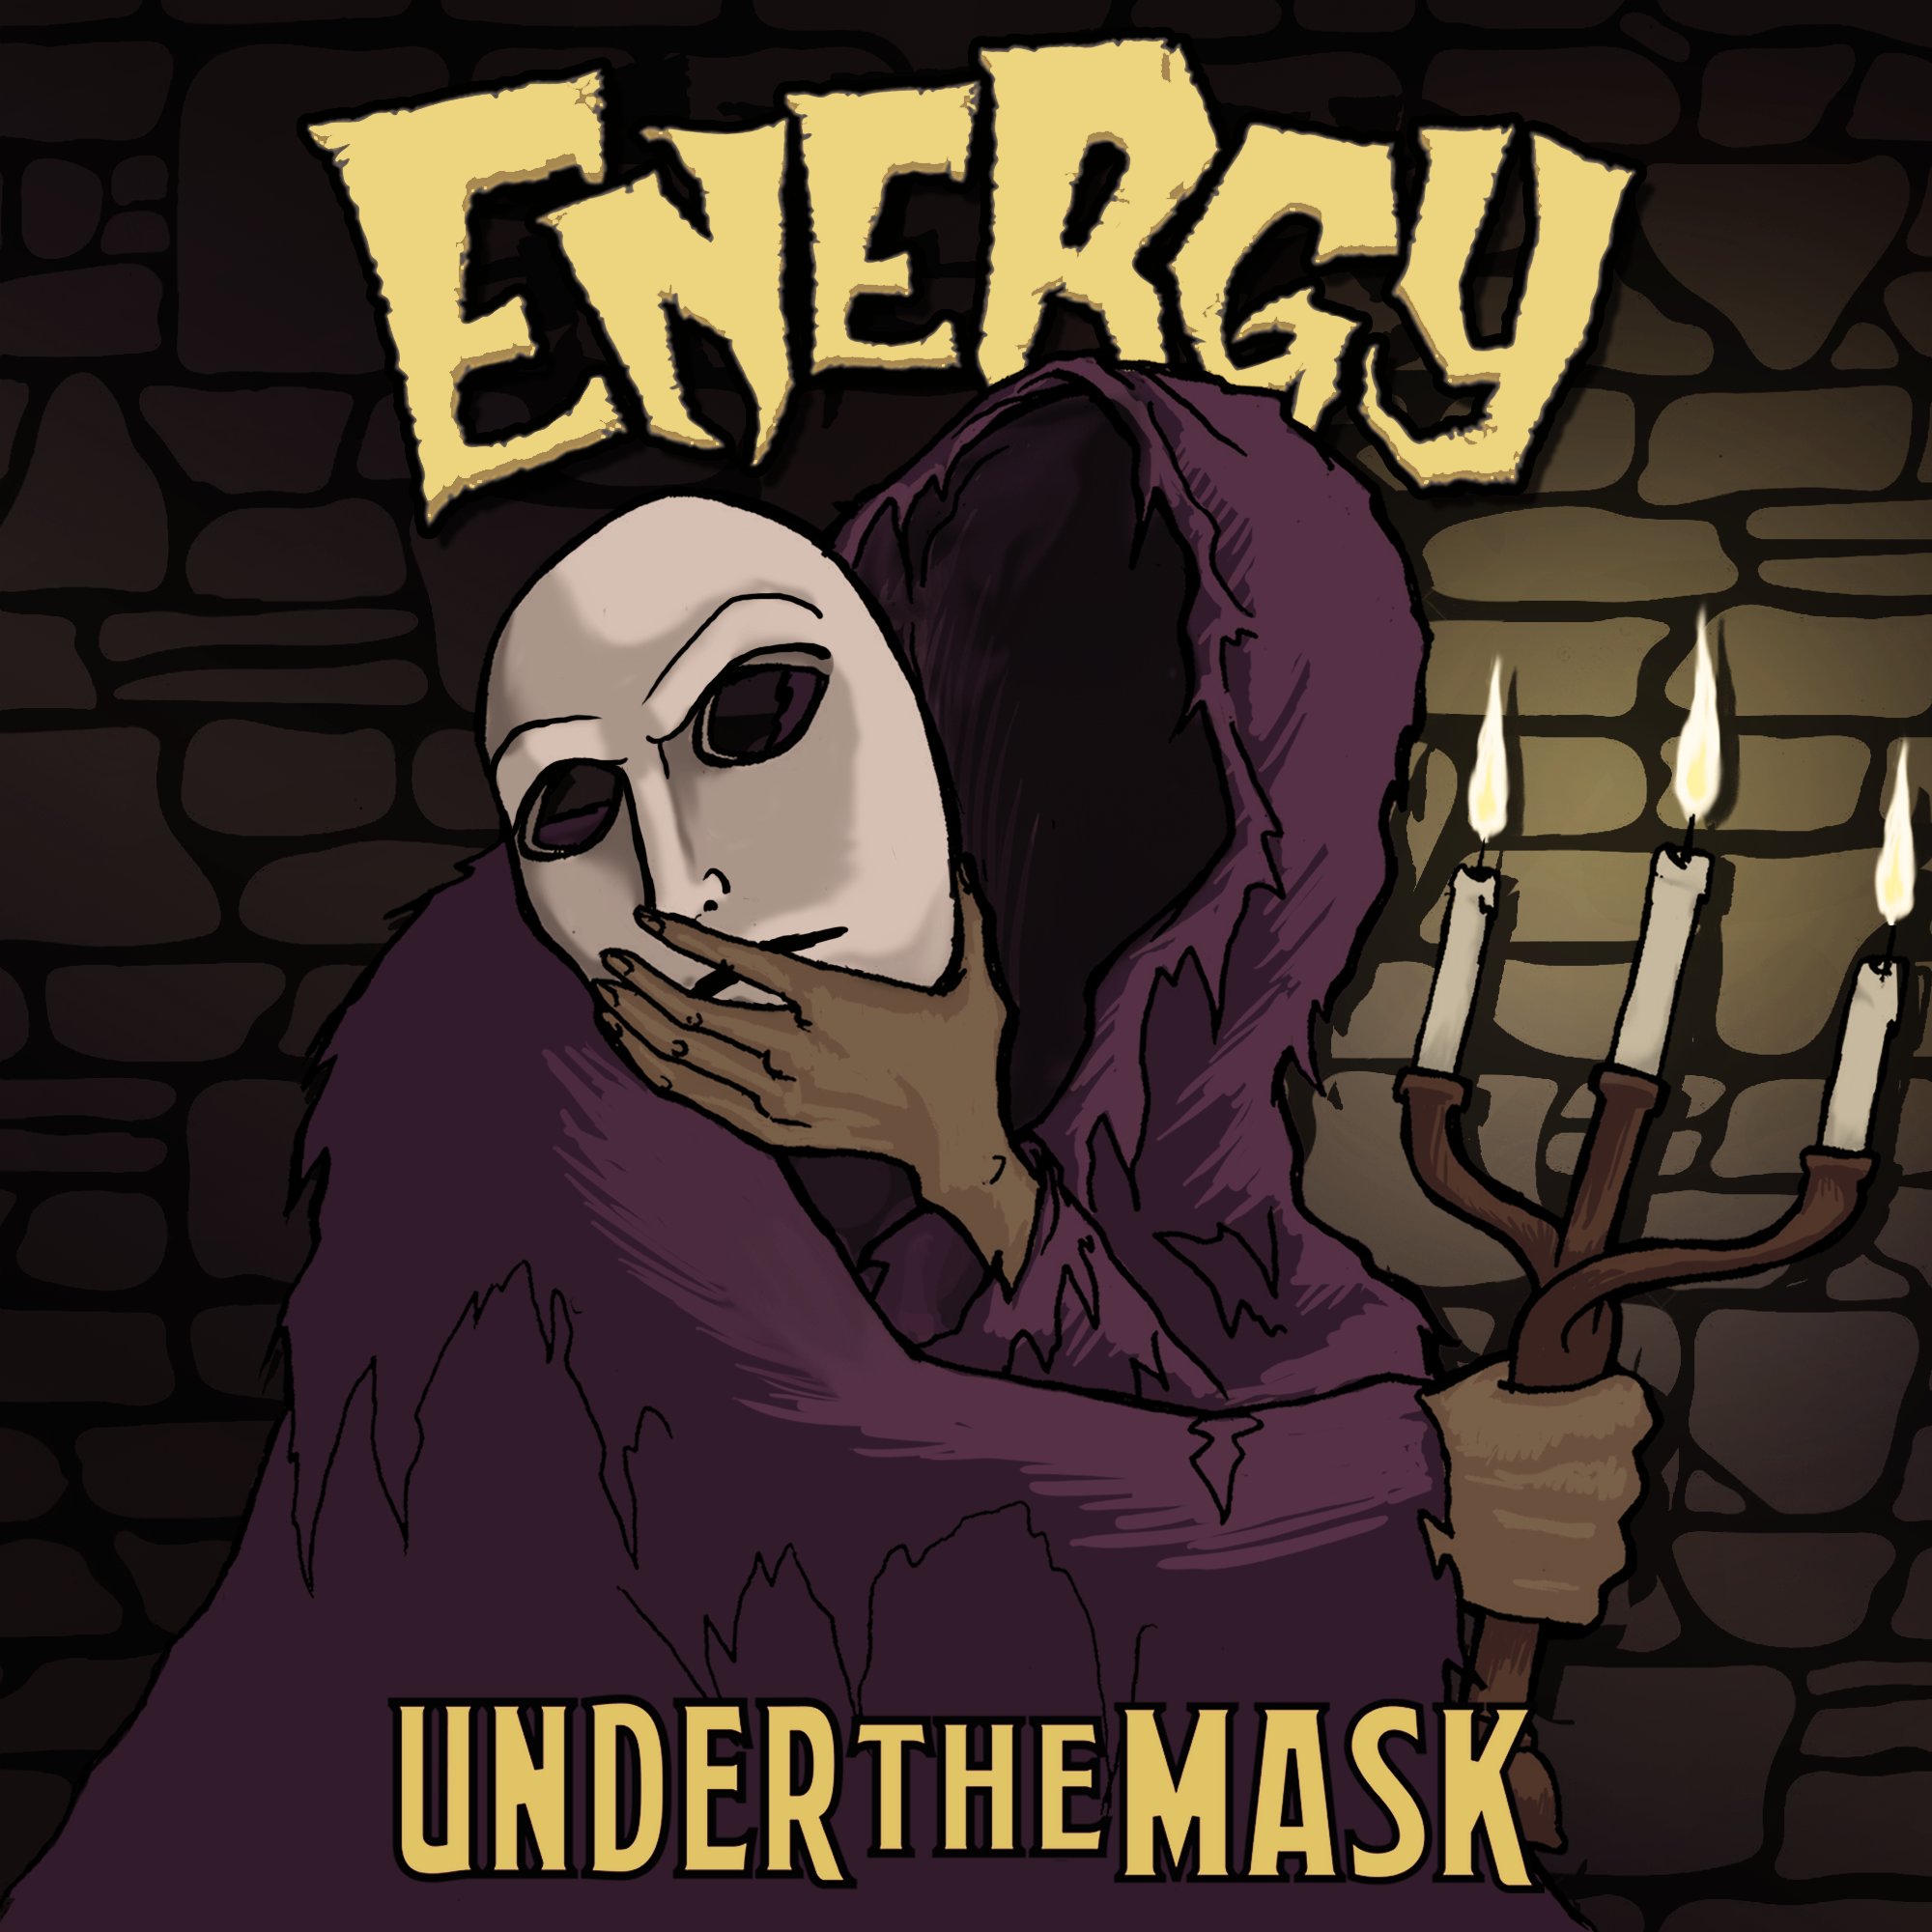 Under mask